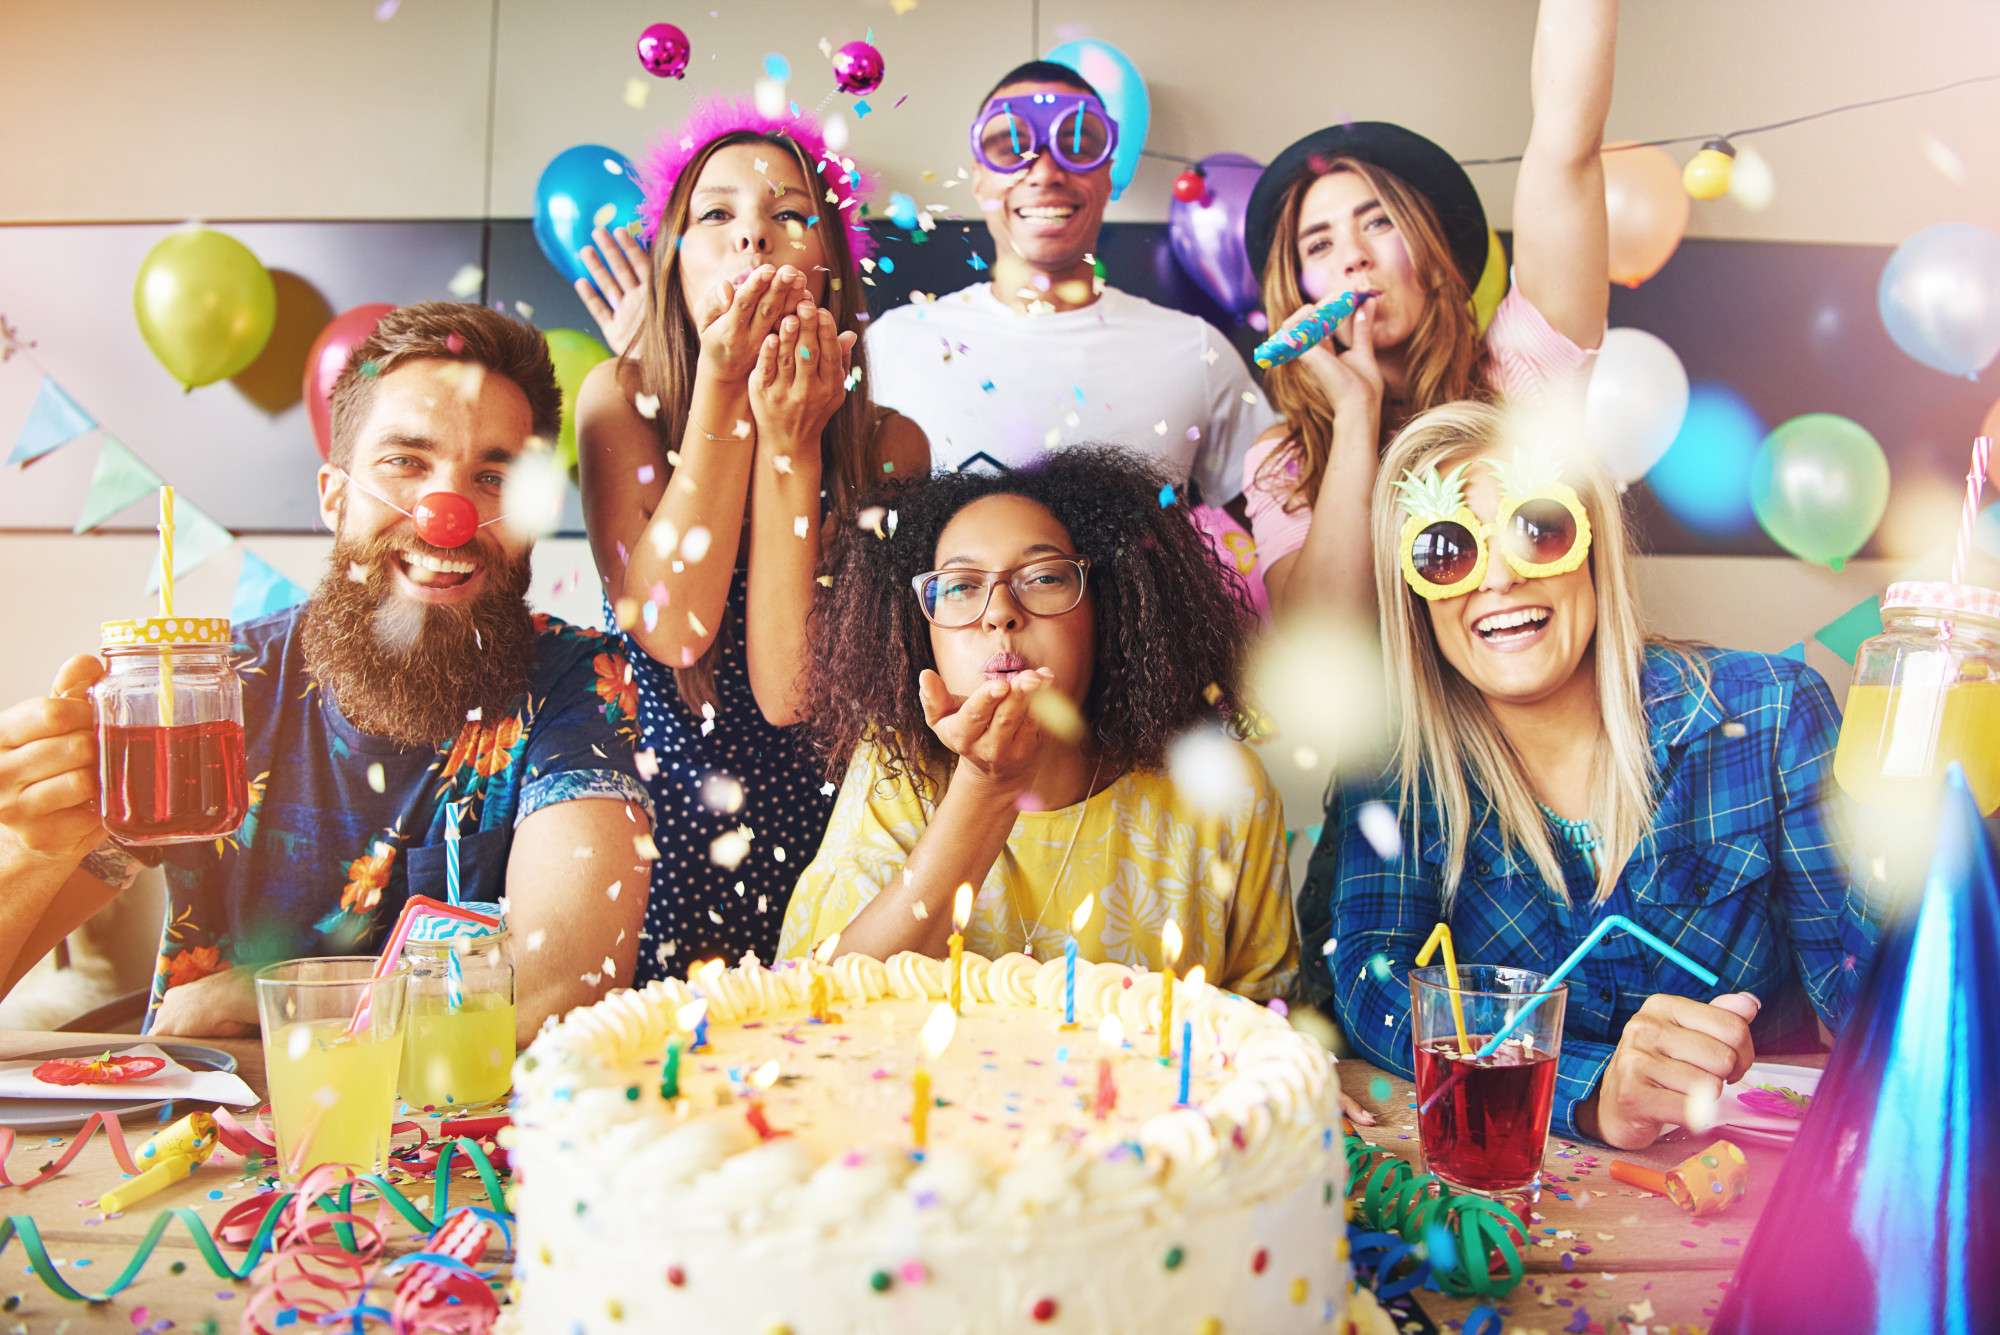 8 Extremely Fun Ways to Celebrate Your Birthday